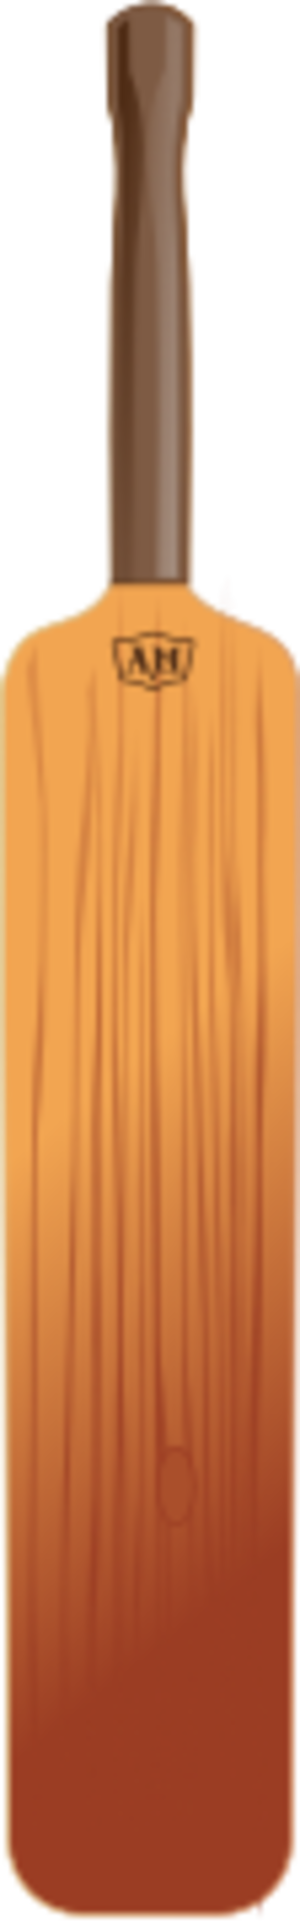 clip art clipart svg openclipart color old vintage equipment wooden 运动 sports stick bat cricket 剪贴画 颜色 器材 木制品 木头